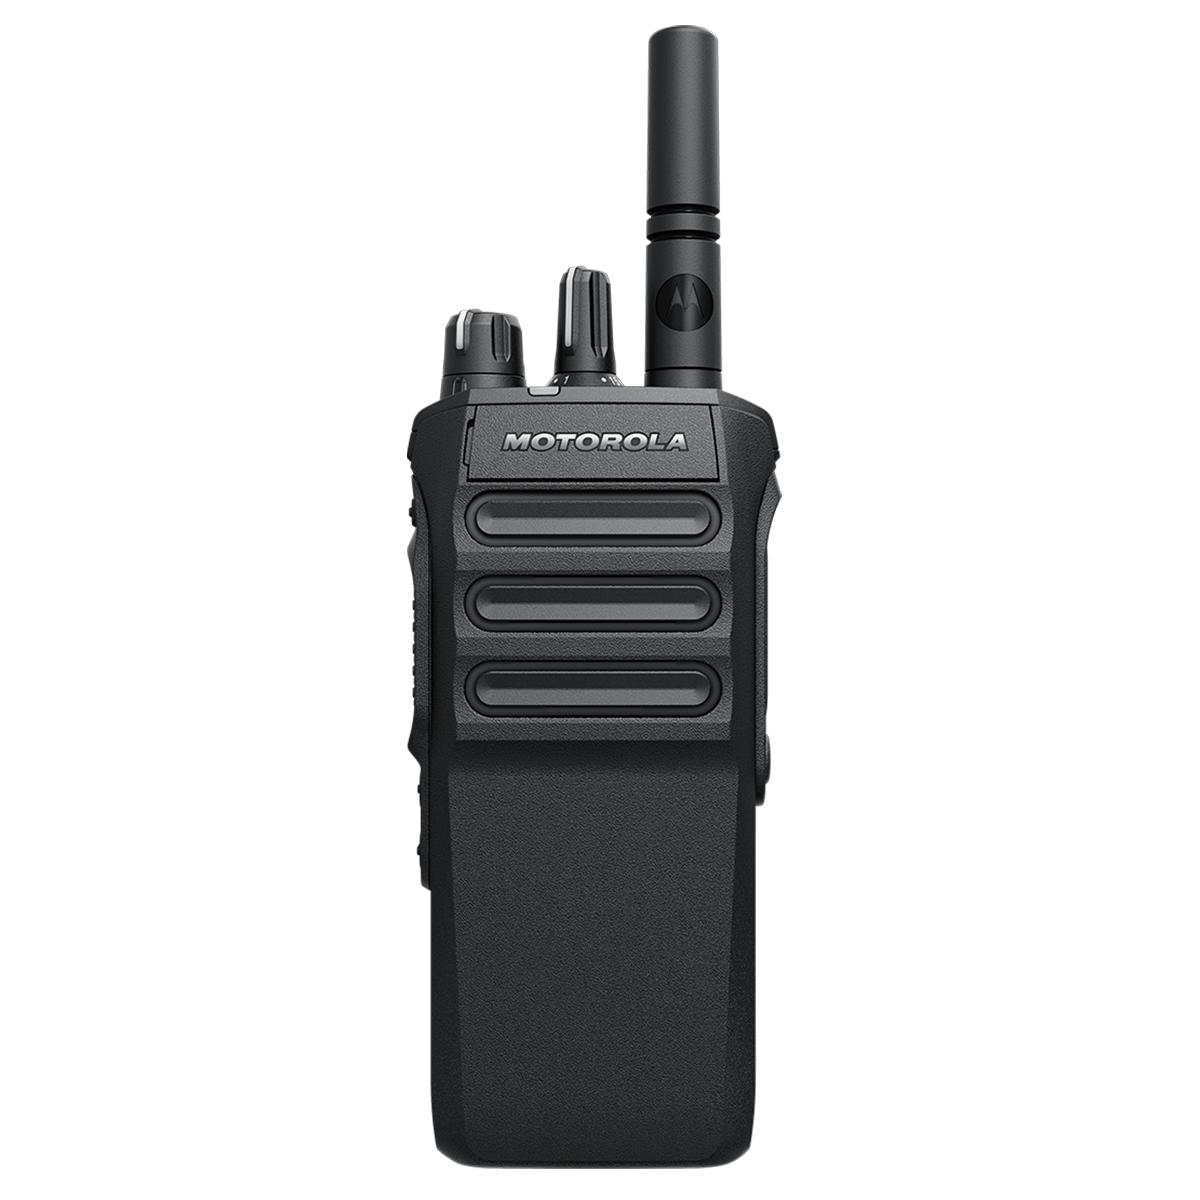 Radio Motorola R7 1000 Ch 5W VHF 136-174MHZ TIA Capable NKP